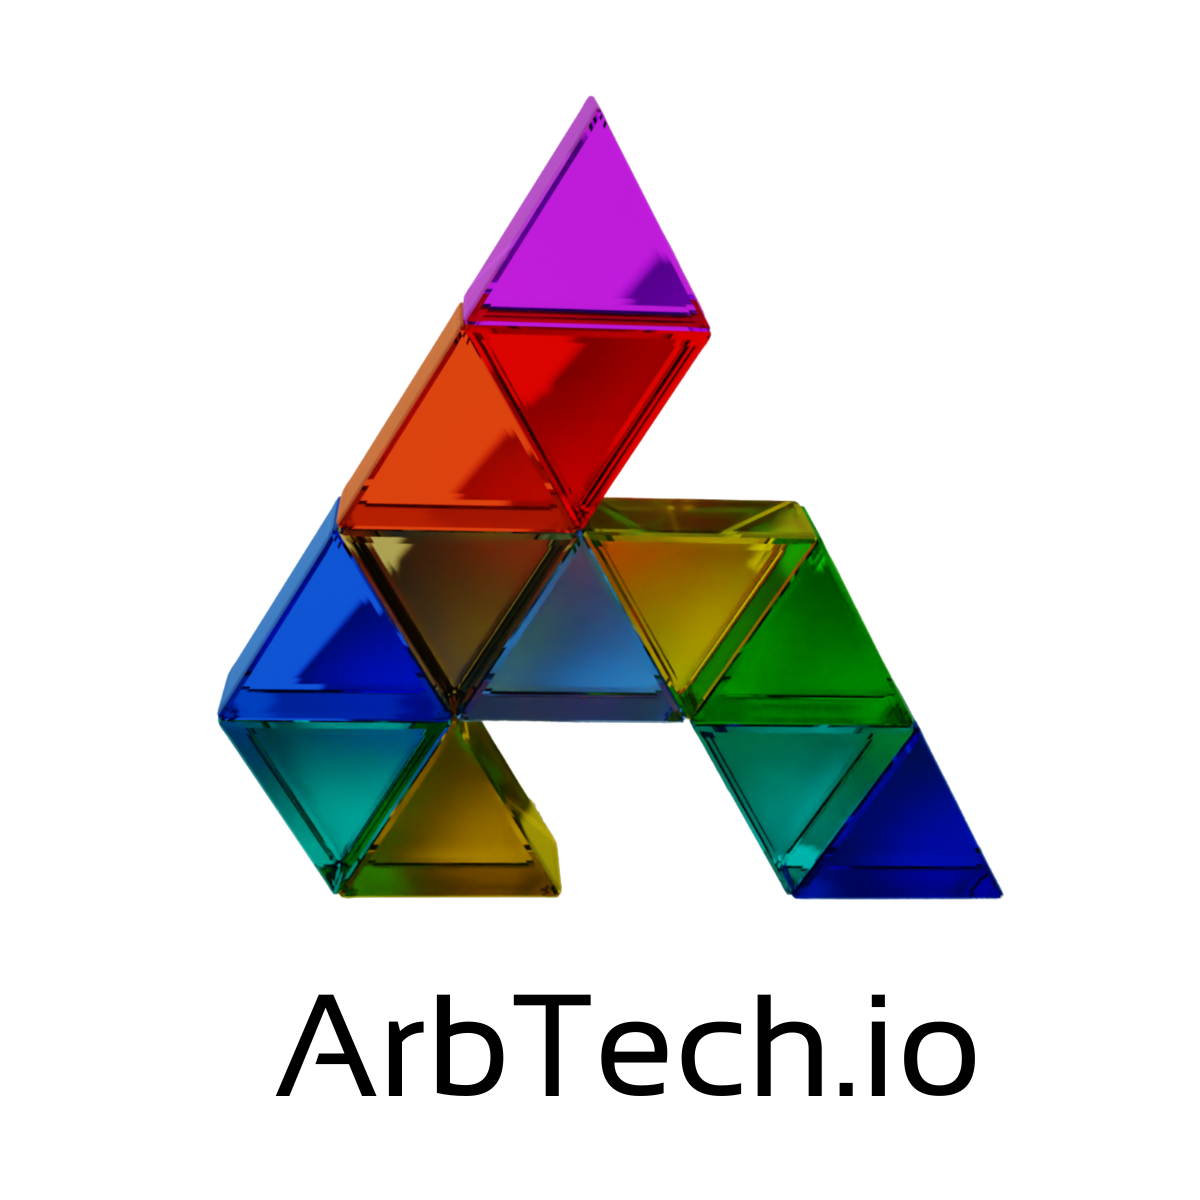 ArbTech